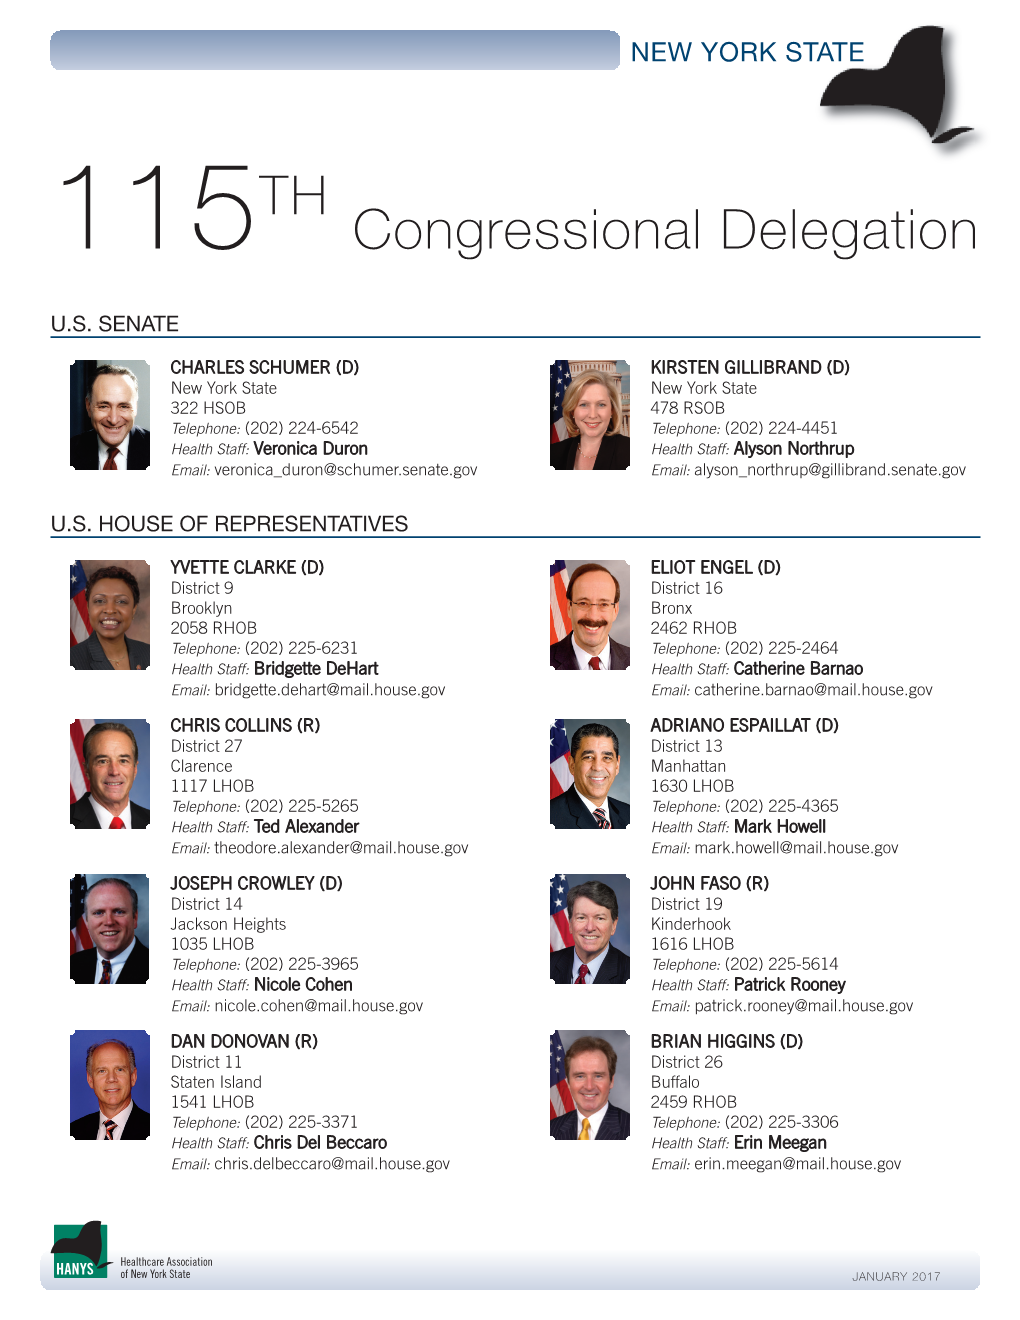 Congressional Delegation